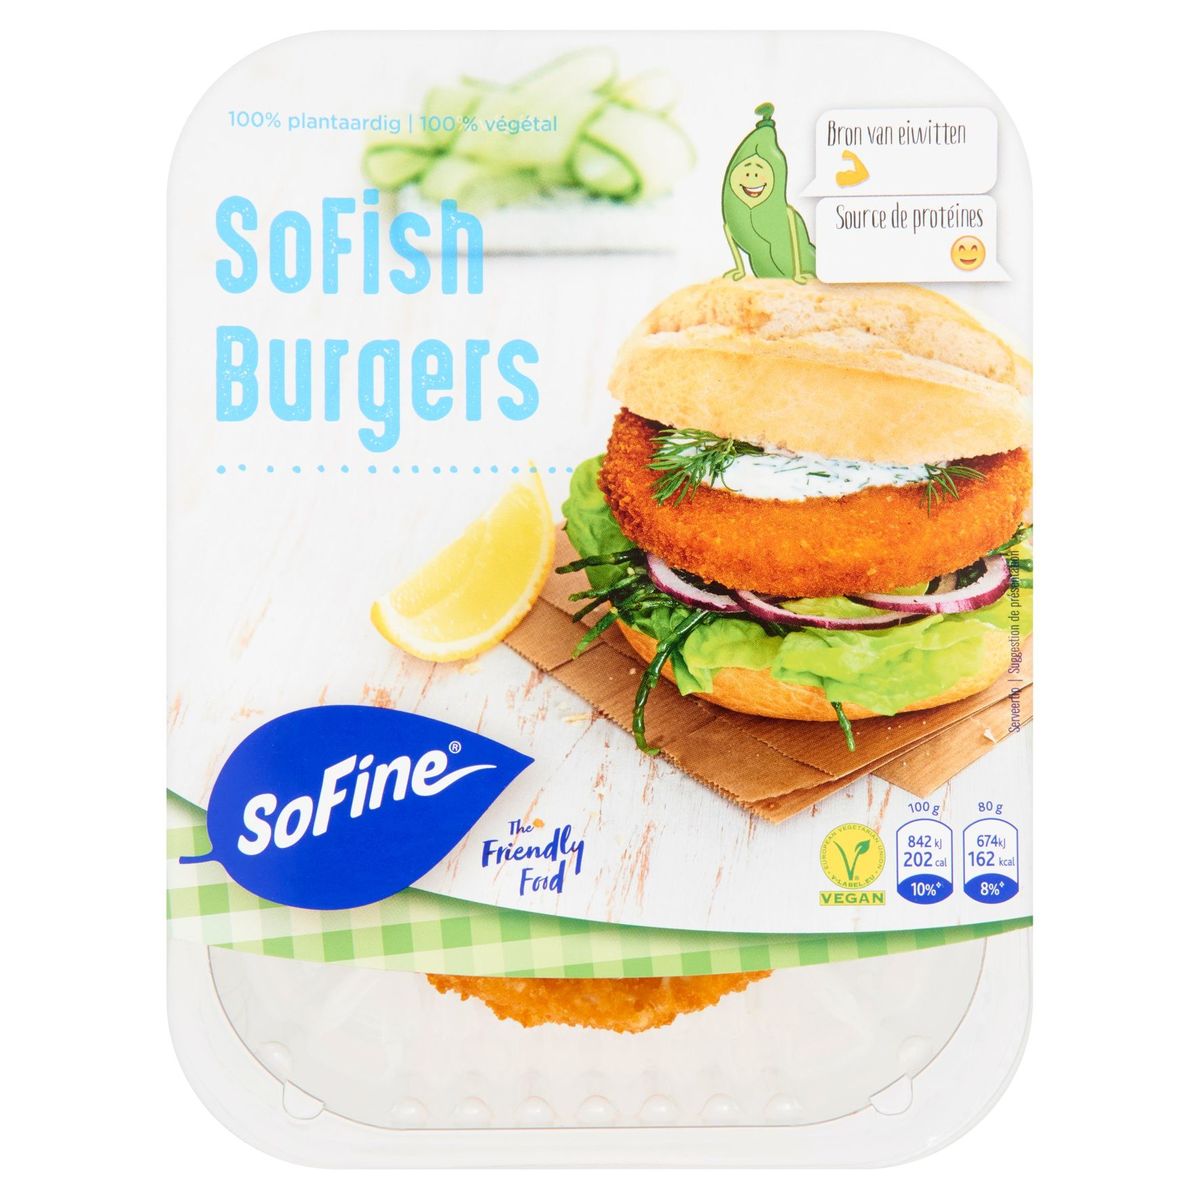 SoFine SoFish Burgers 2 x 80 g